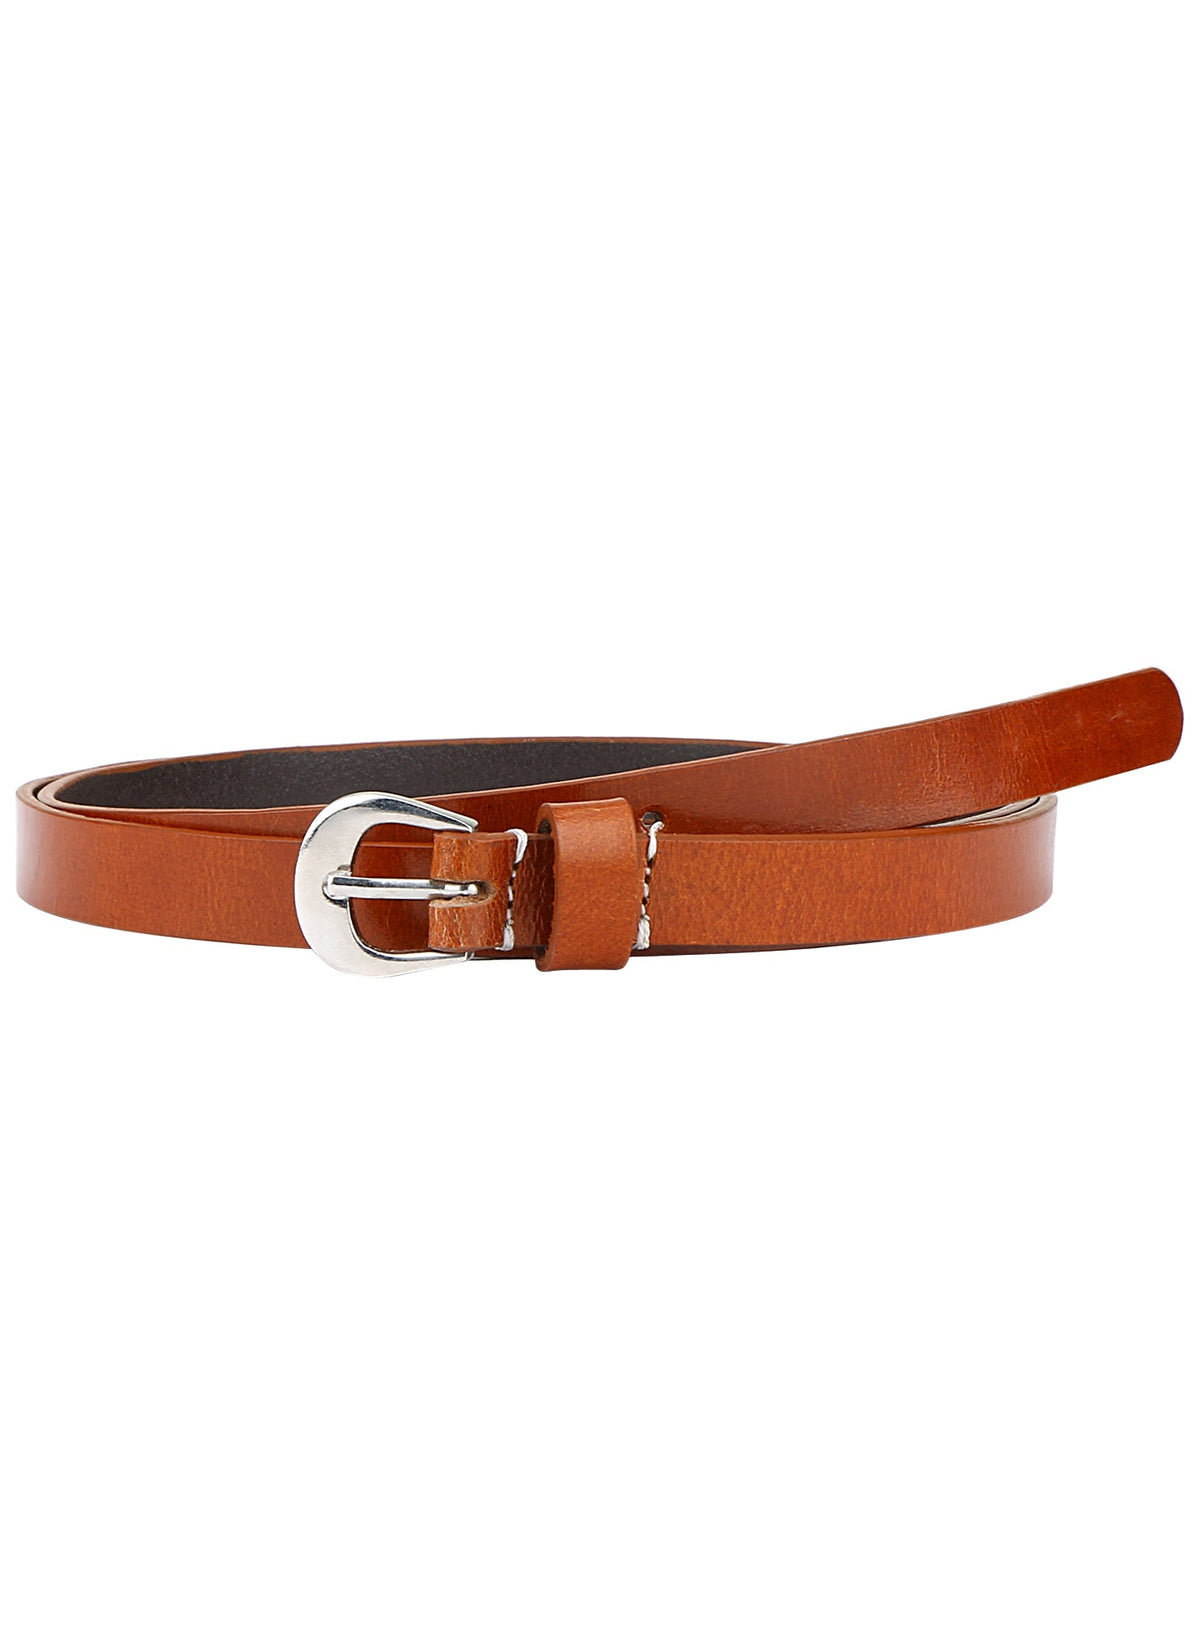 Genuine leather tan belt Aditi Wasan